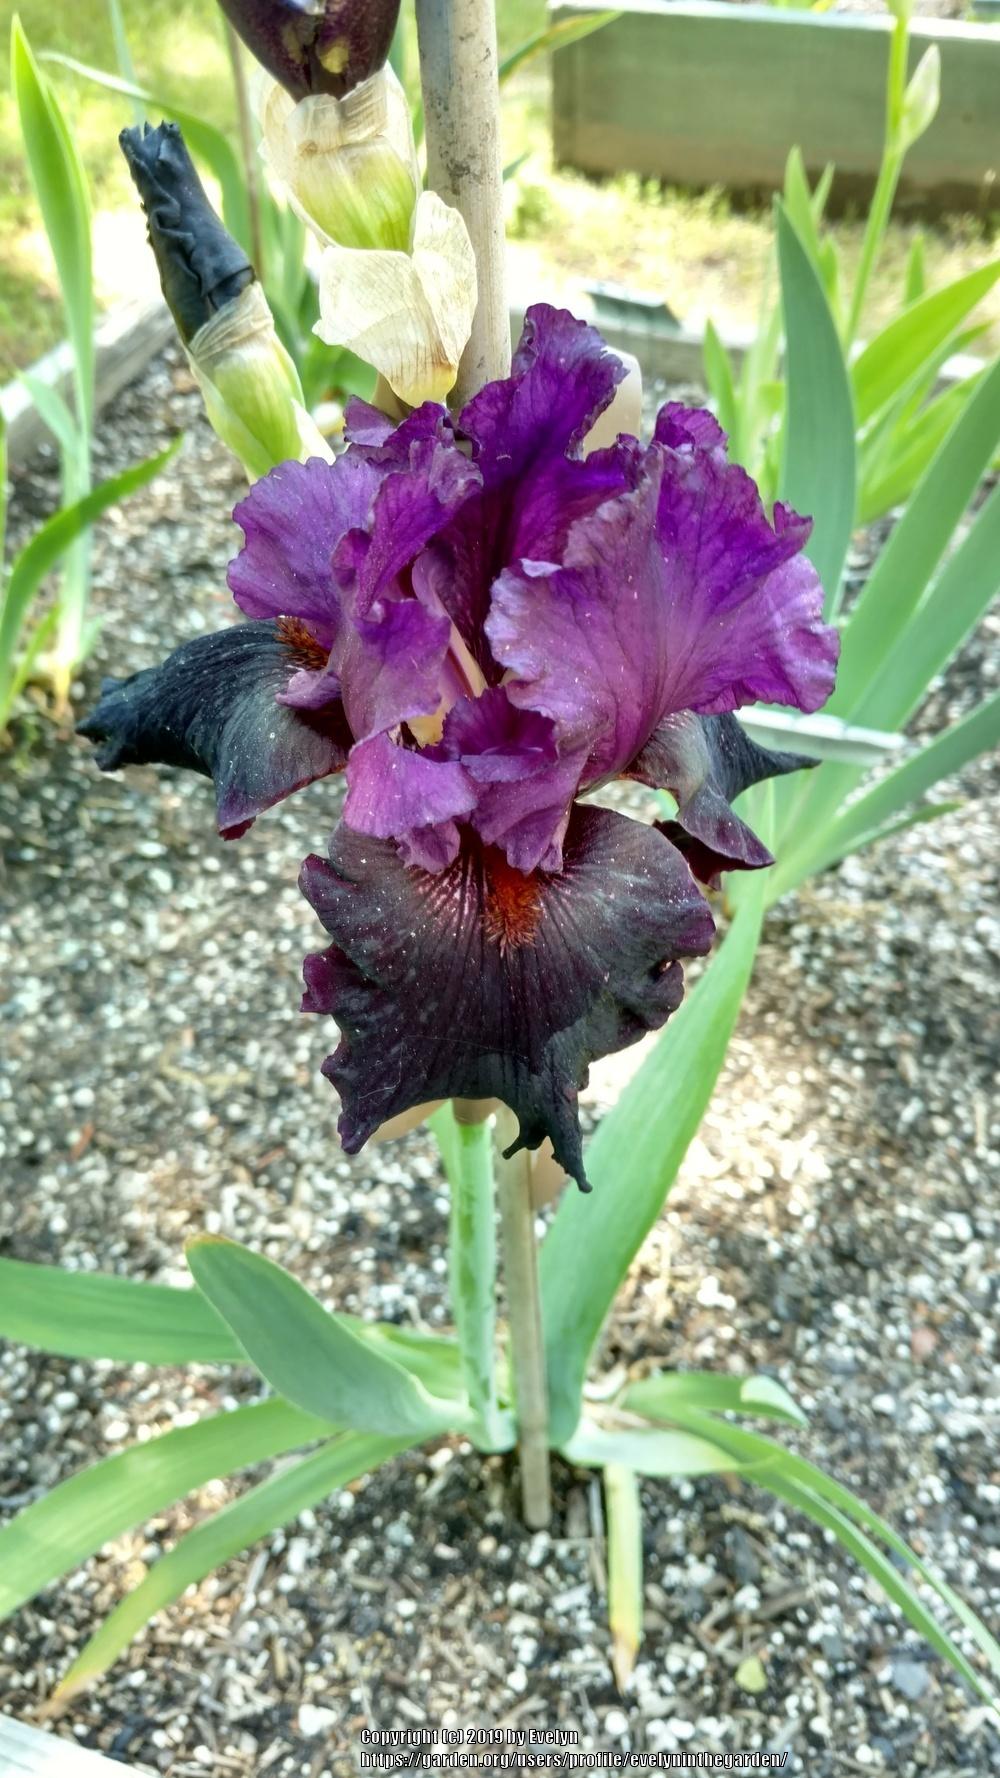 Photo of Tall Bearded Iris (Iris 'Storm Rider') uploaded by evelyninthegarden